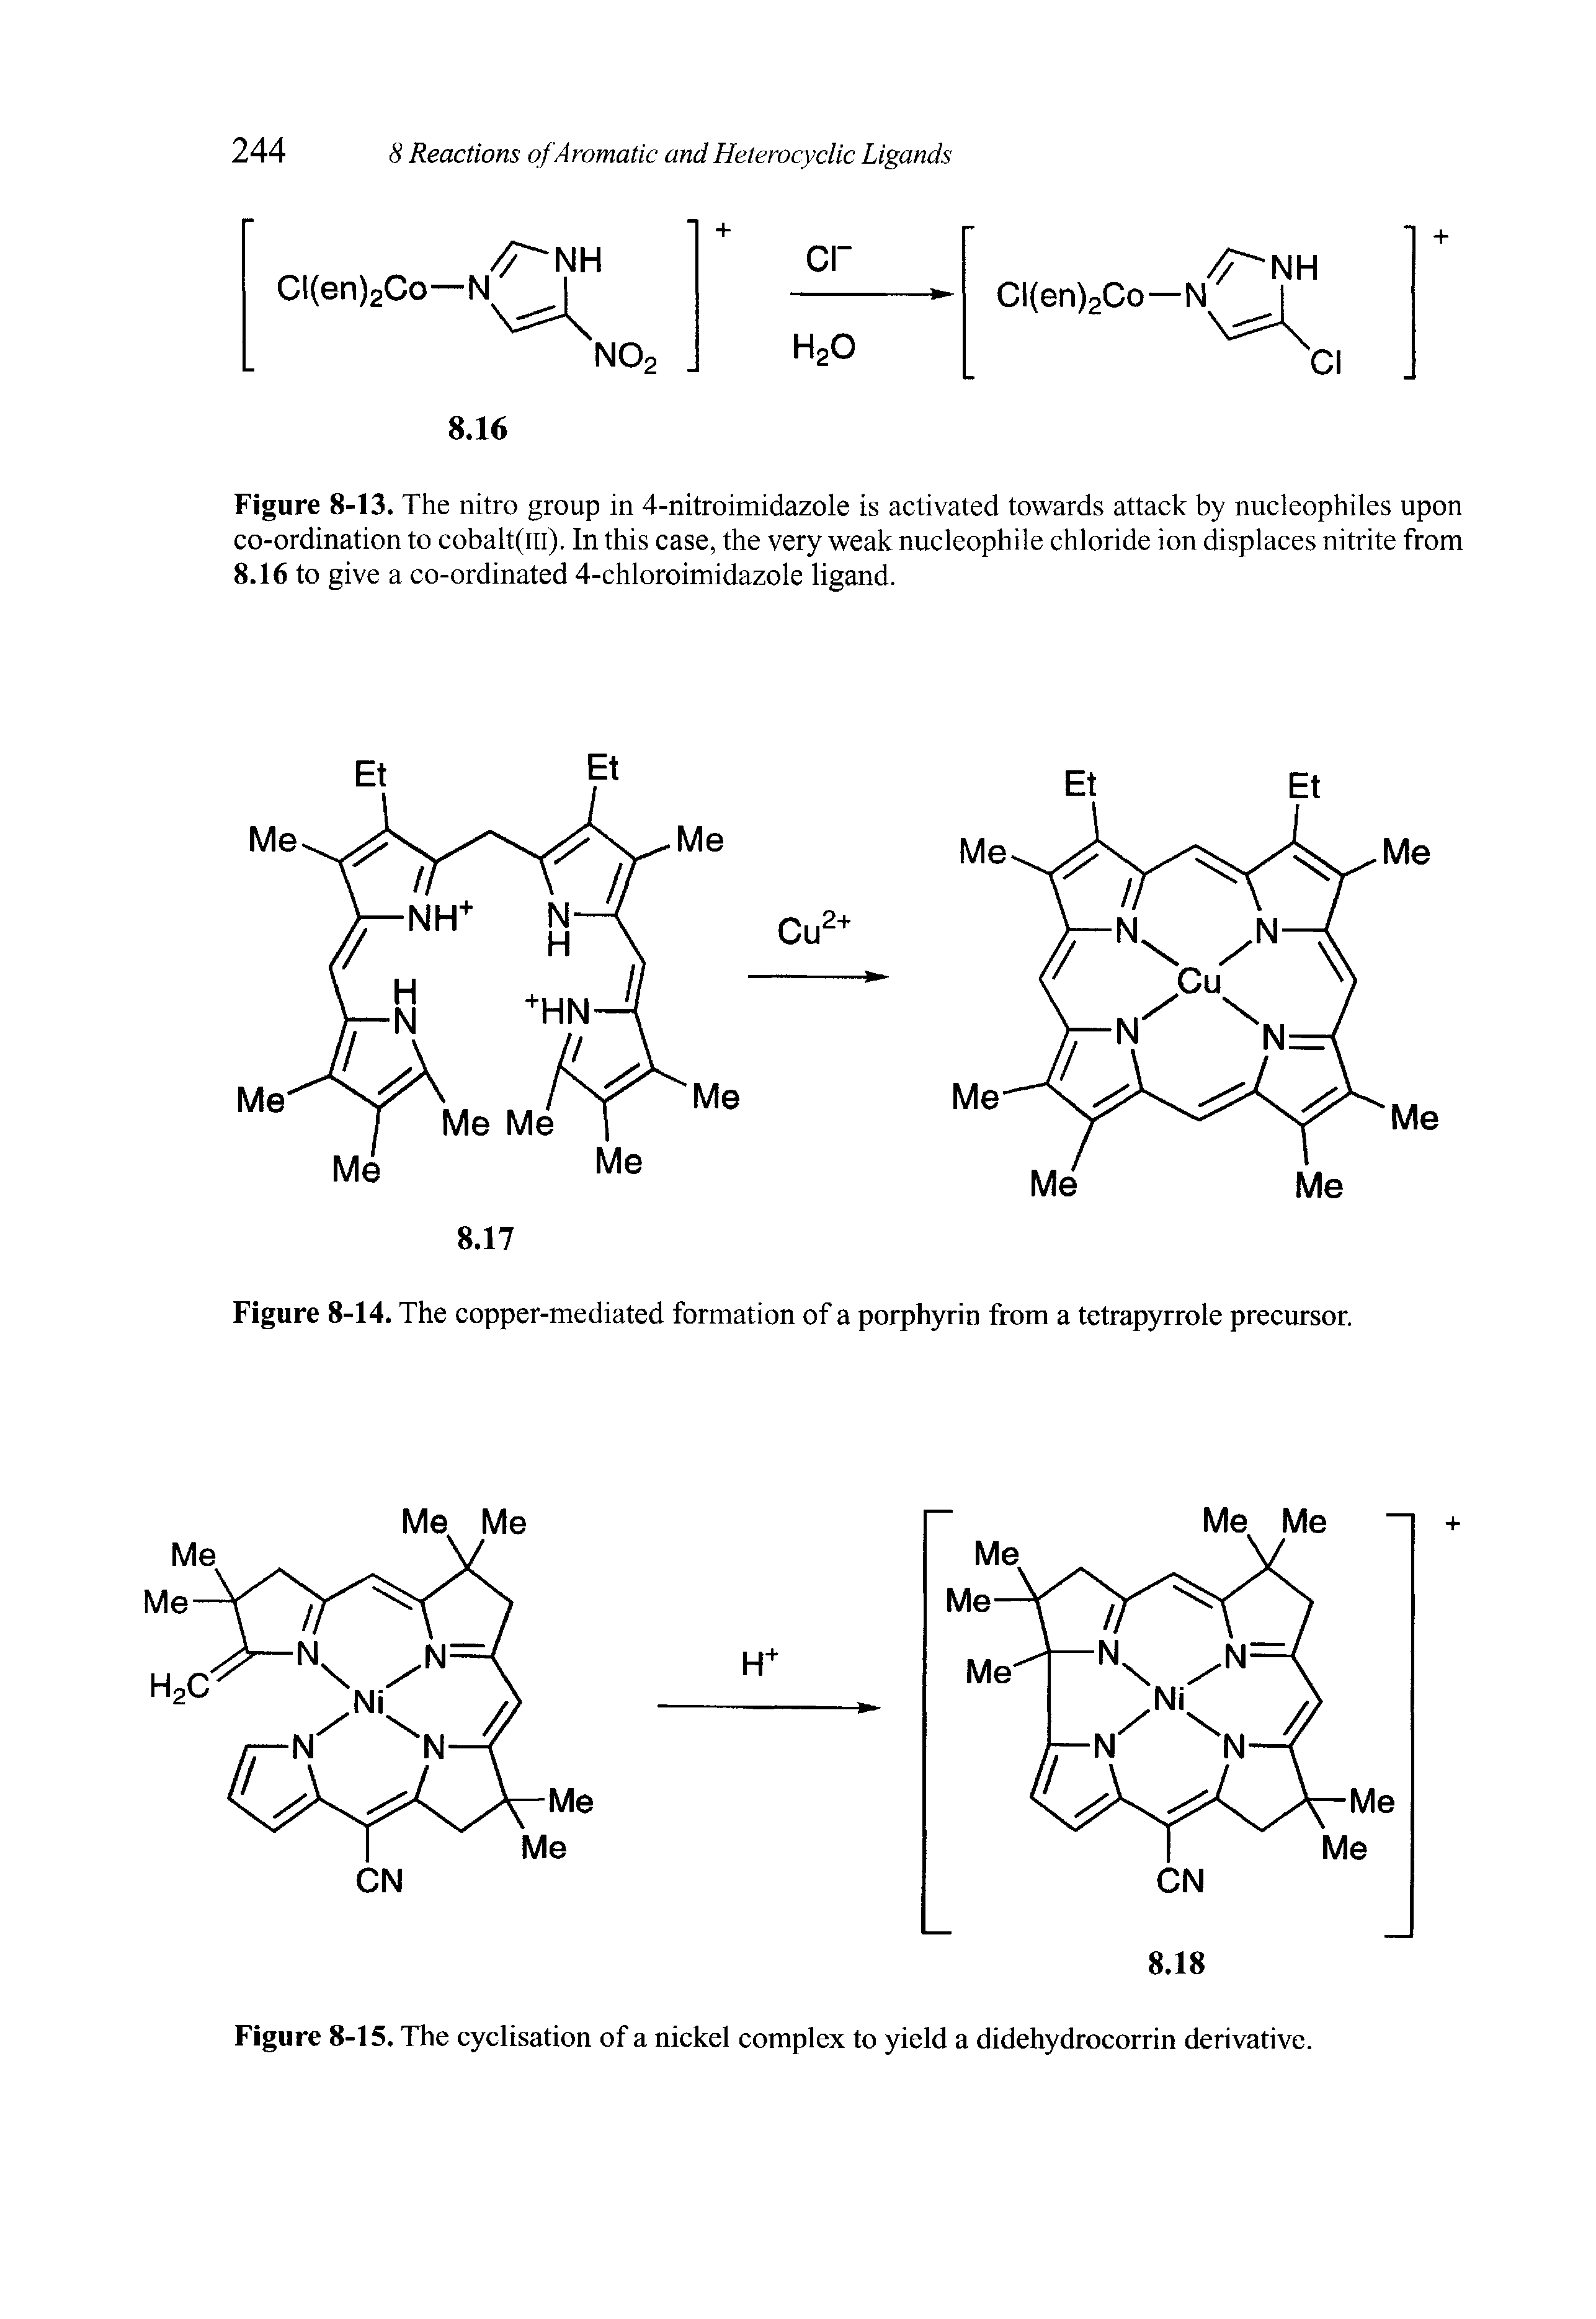 Figure 8-14. The copper-mediated formation of a porphyrin from a tetrapyrrole precursor.